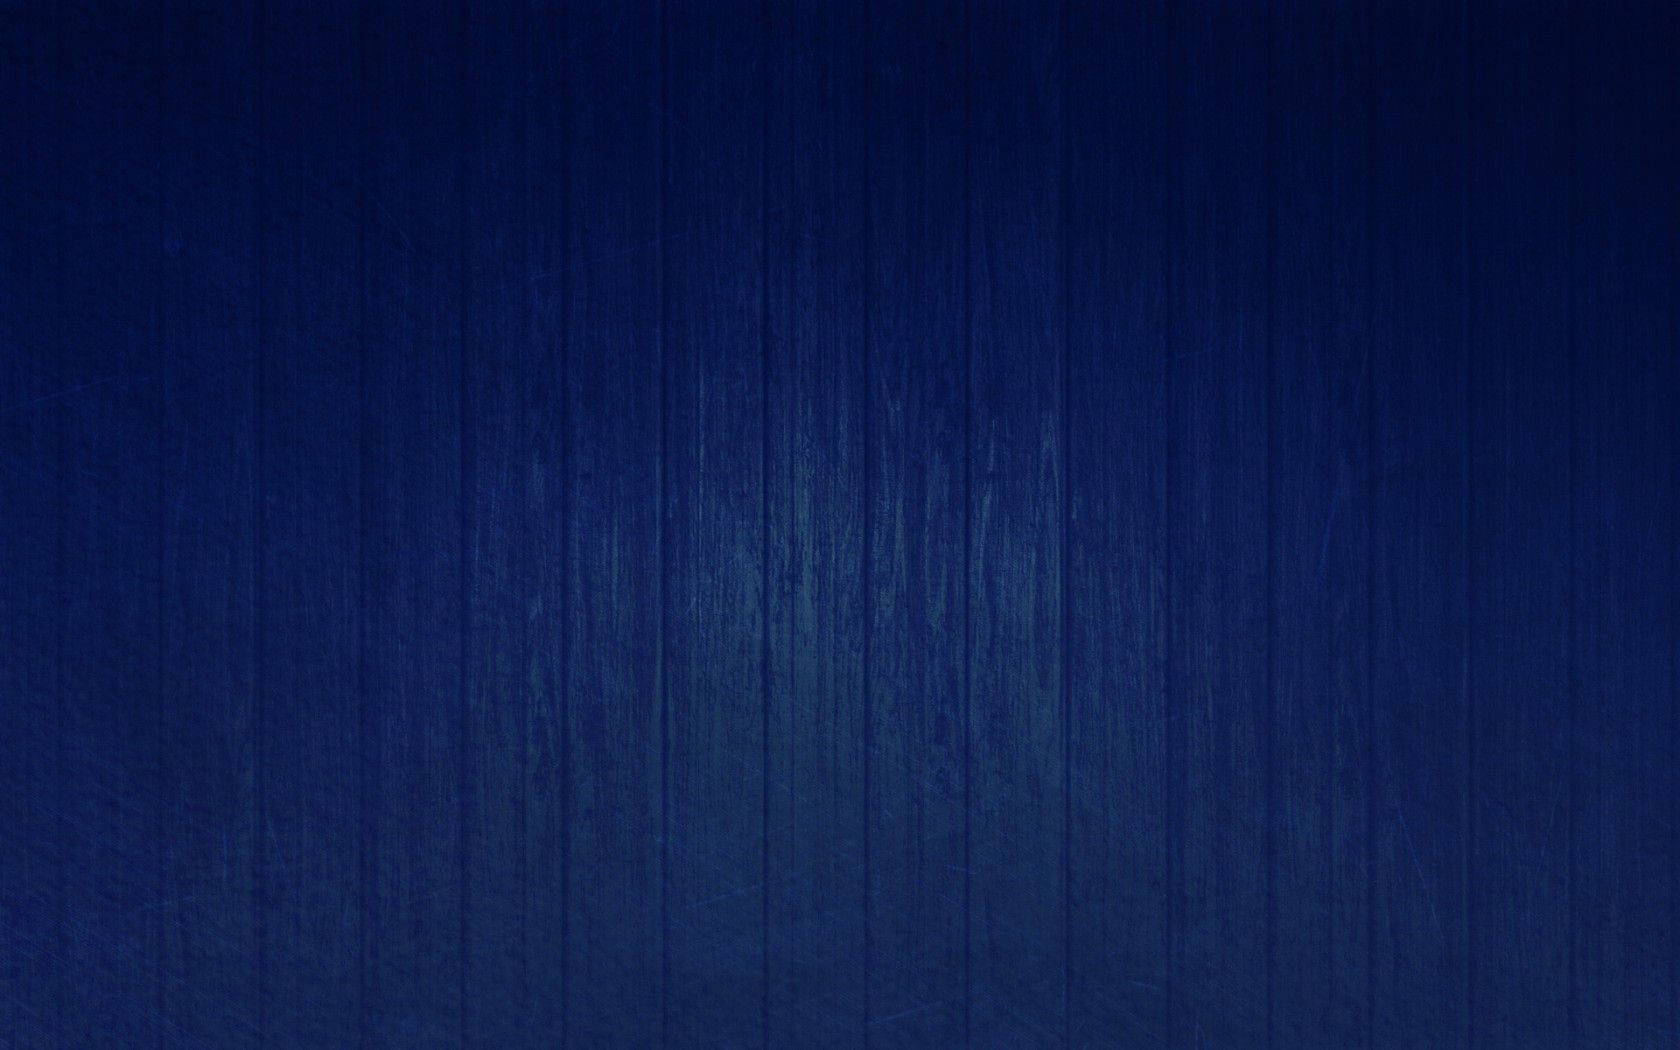 Blue Textured Wooden Wall